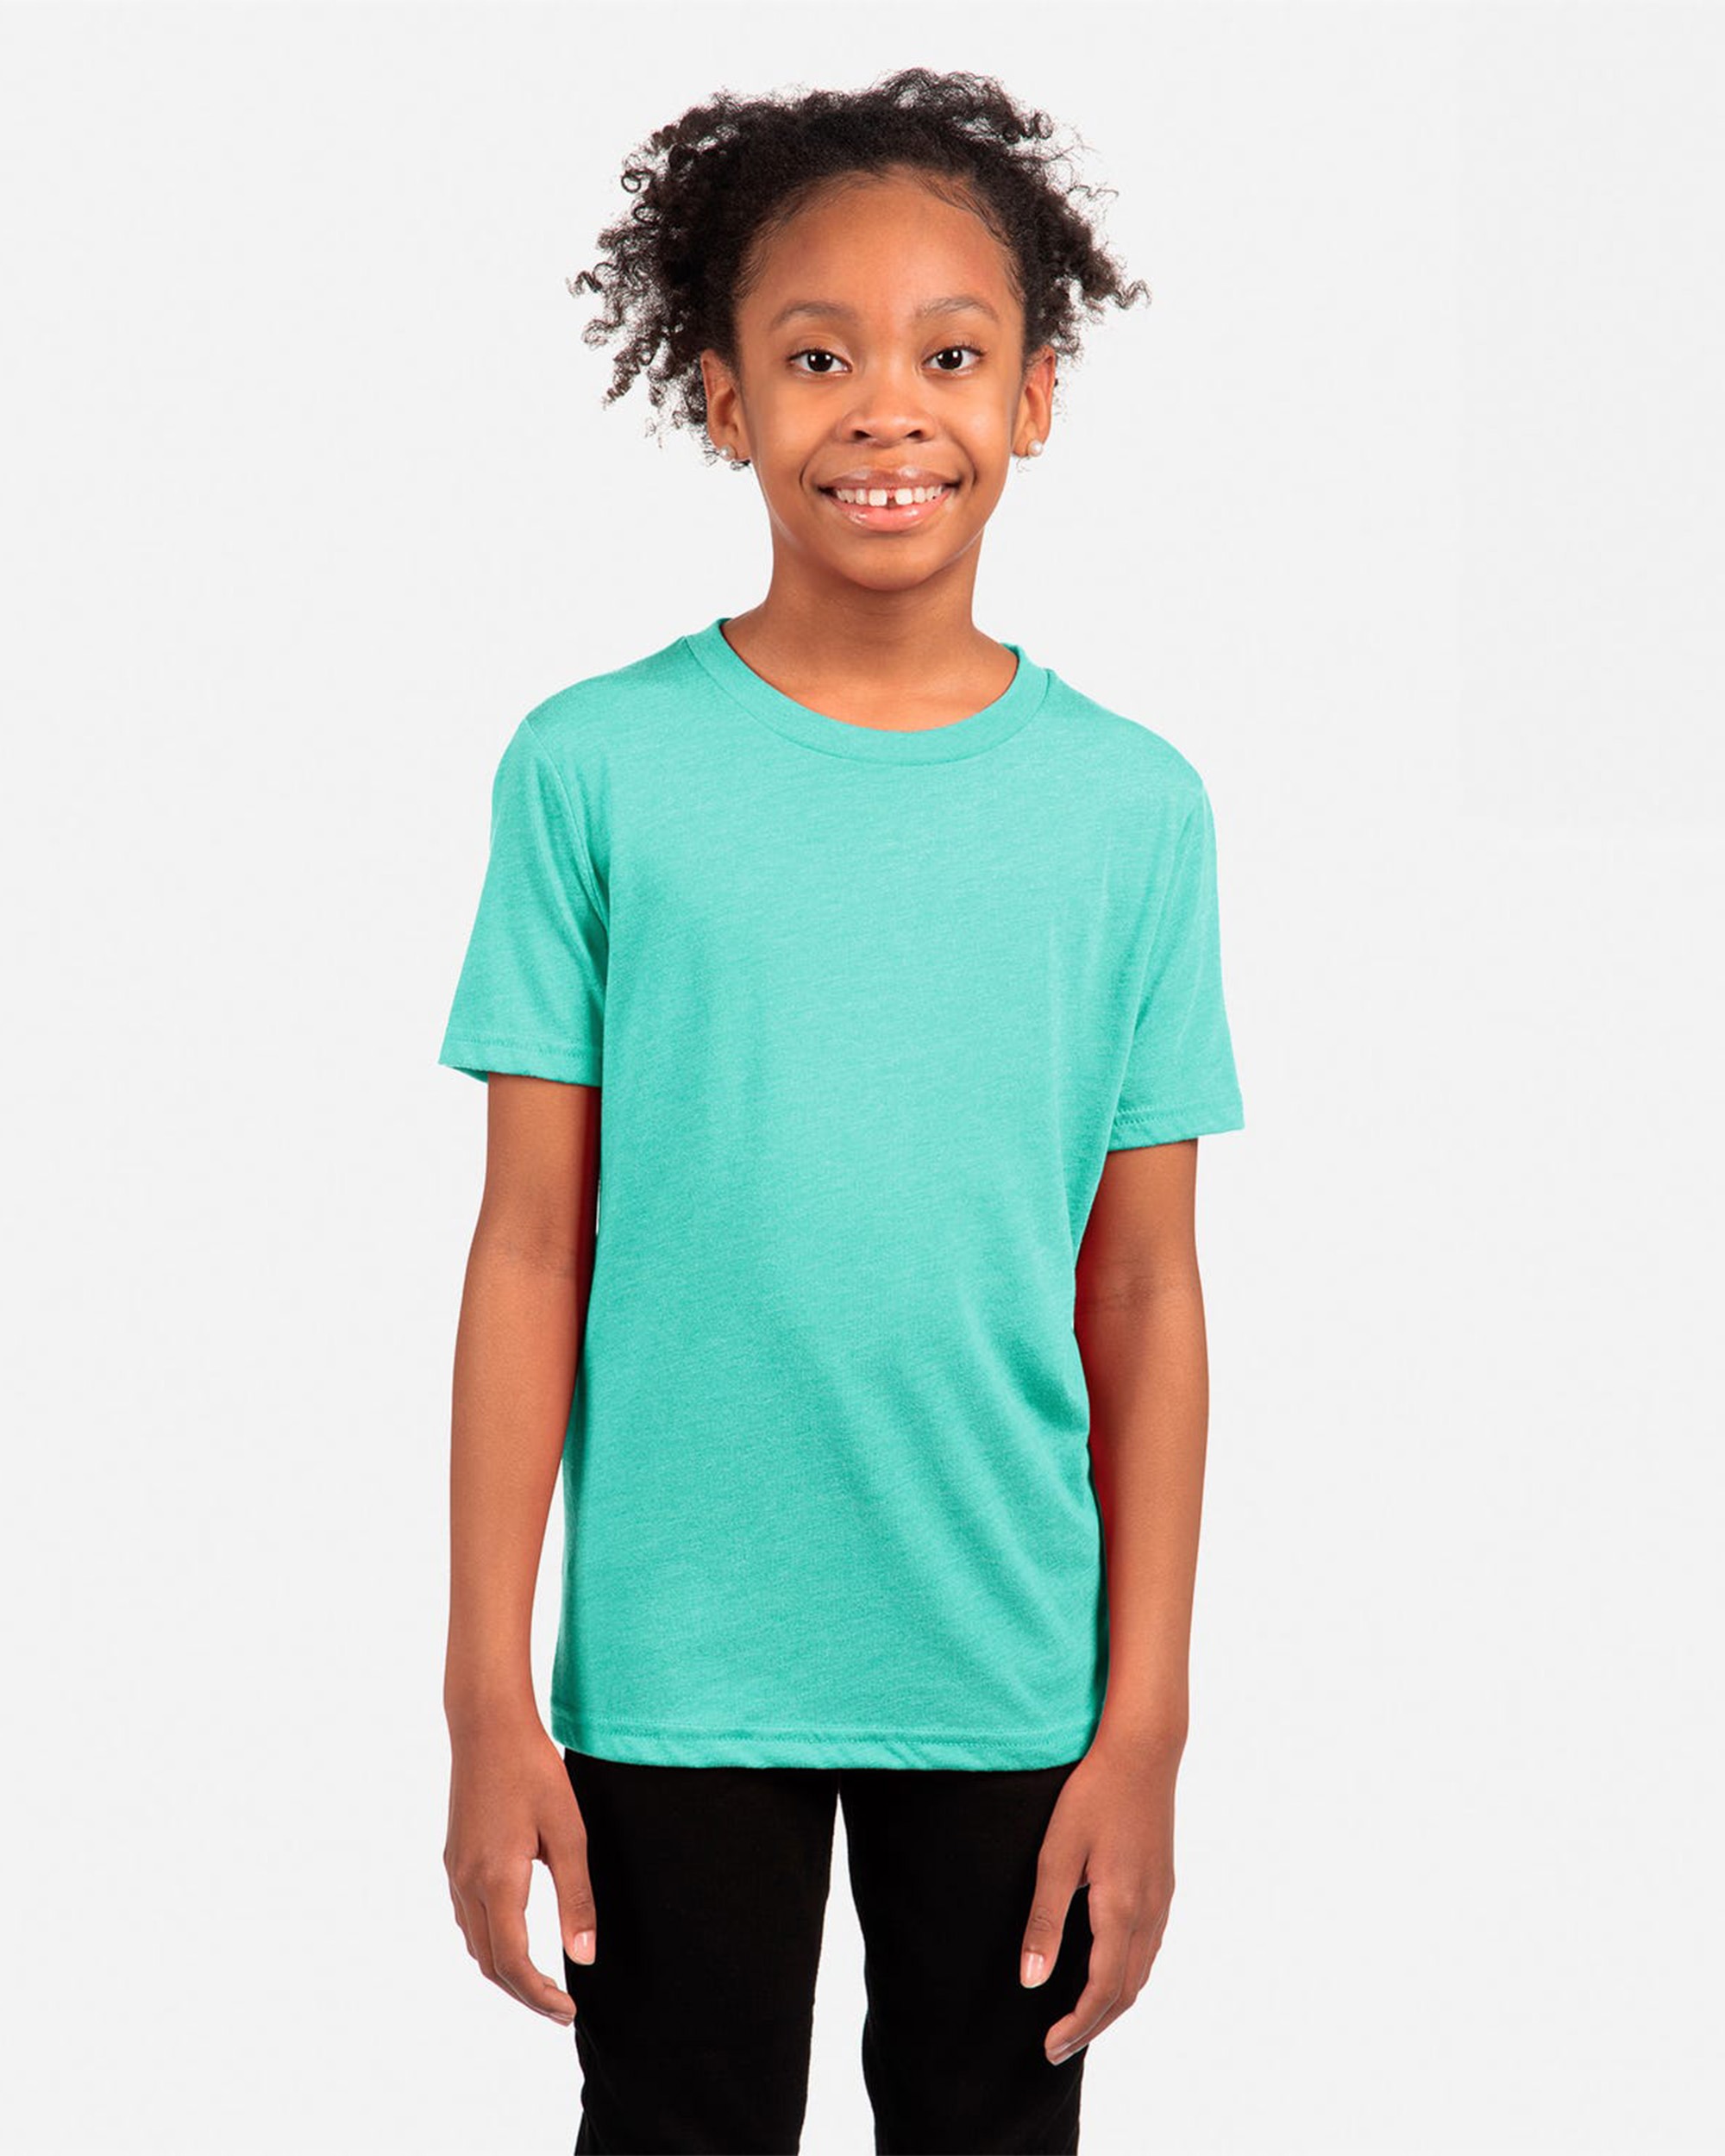 Next Level Apparel® 6310 Youth Tri-Blend T-Shirt